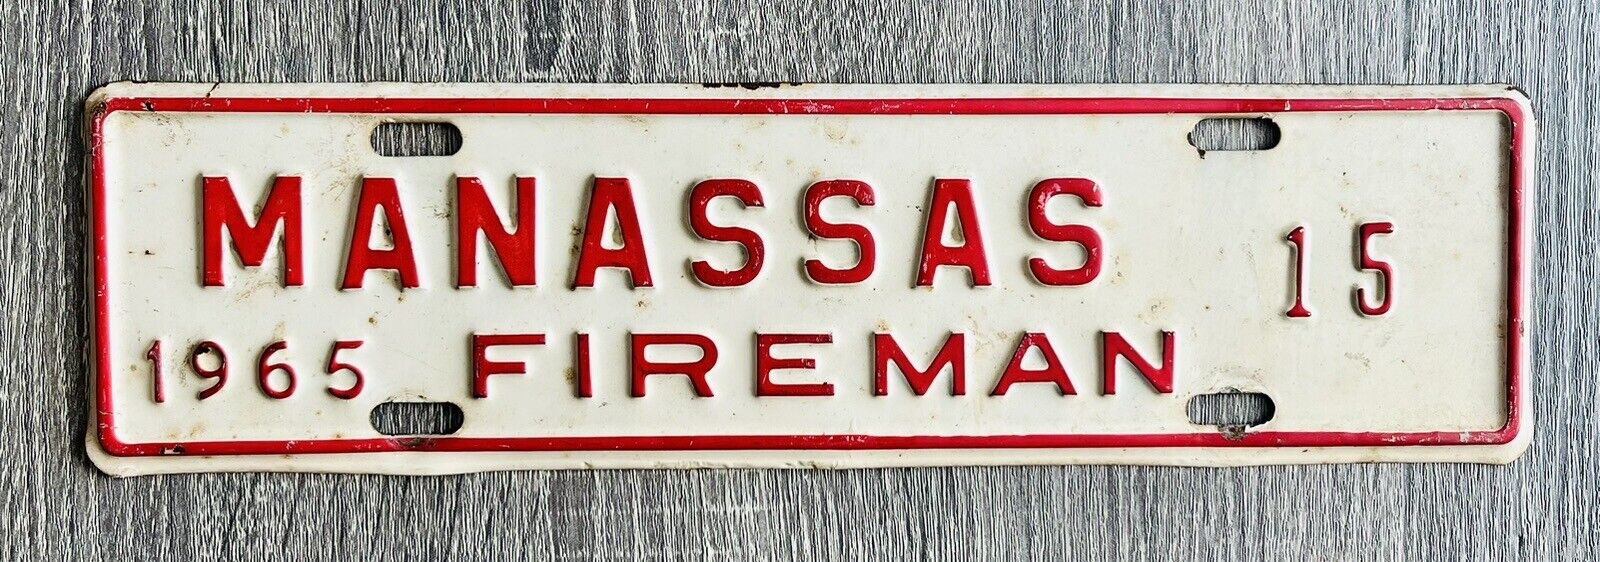 1965 Massassas Virginia Fireman License Plate Town Tag Topper Firefighter